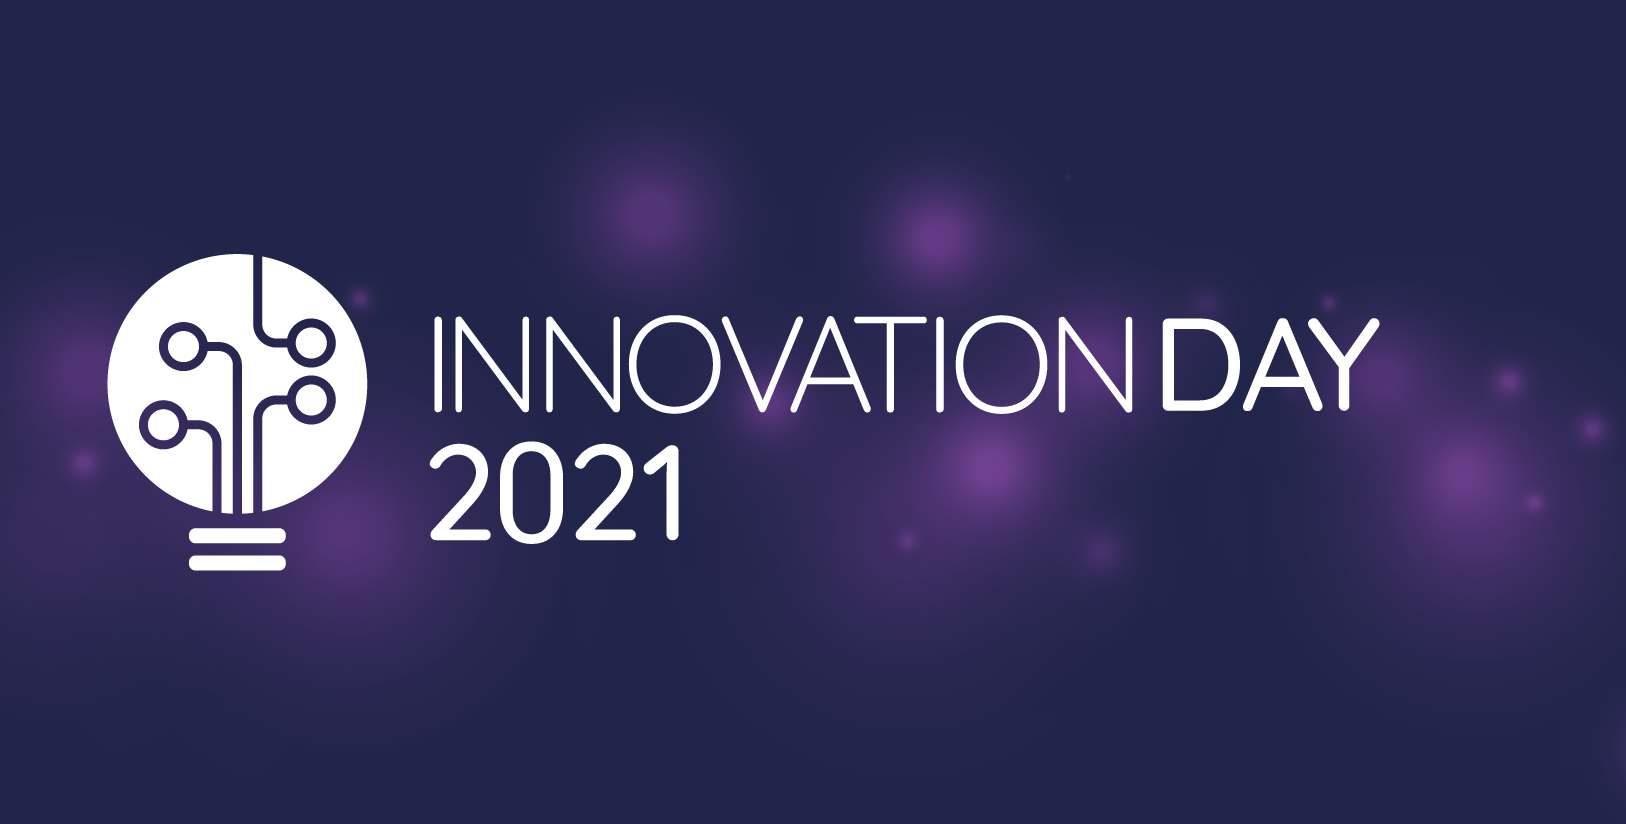 Innovation Day 2021 event logo